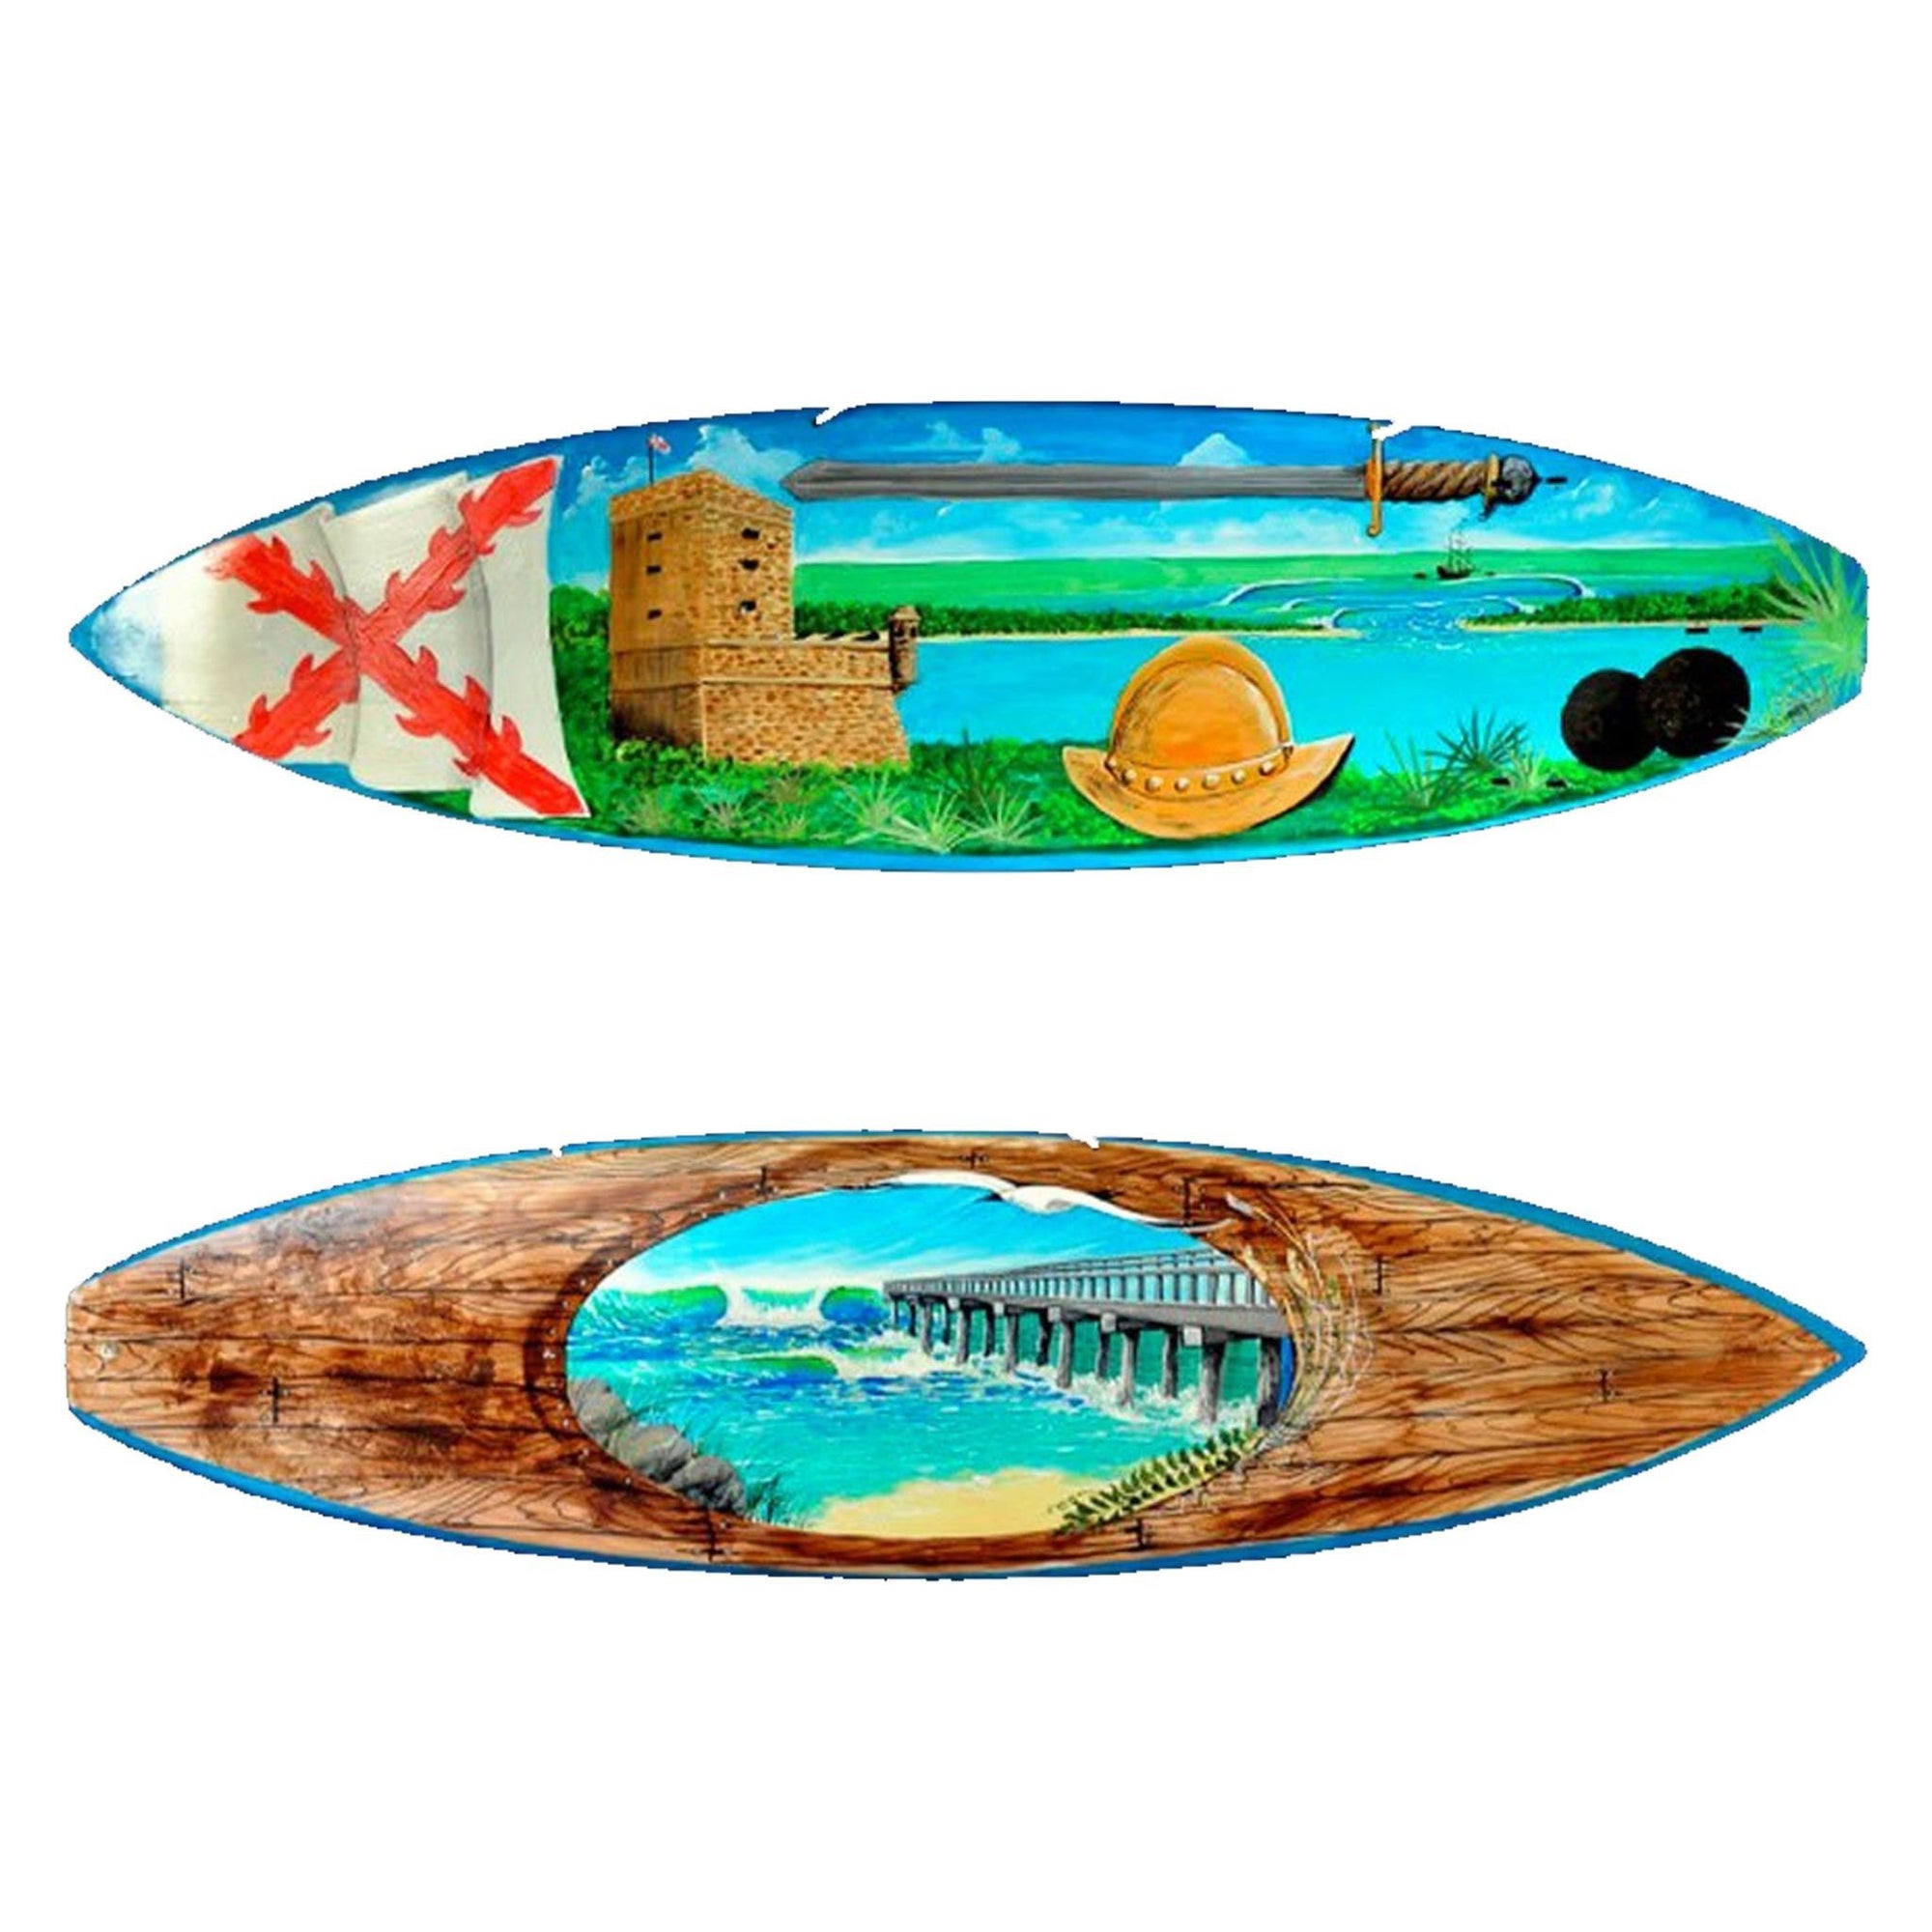 Stewart Maxcy Matanzas Original Art Collector Surfboard